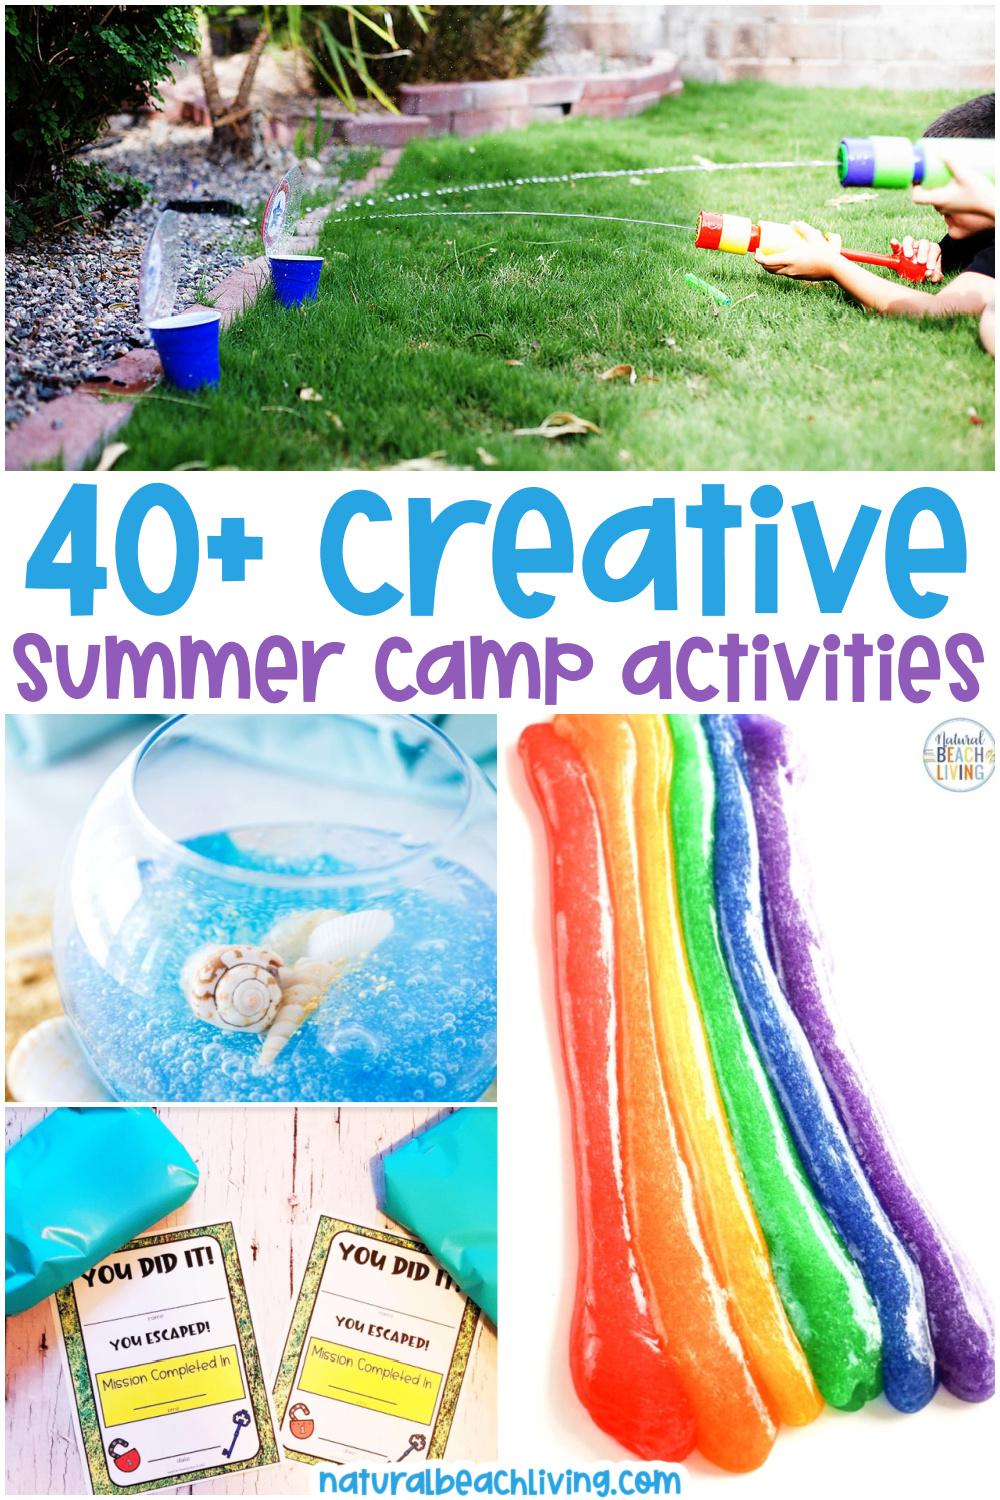 40+ Creative Summer Camp Activities for Kids